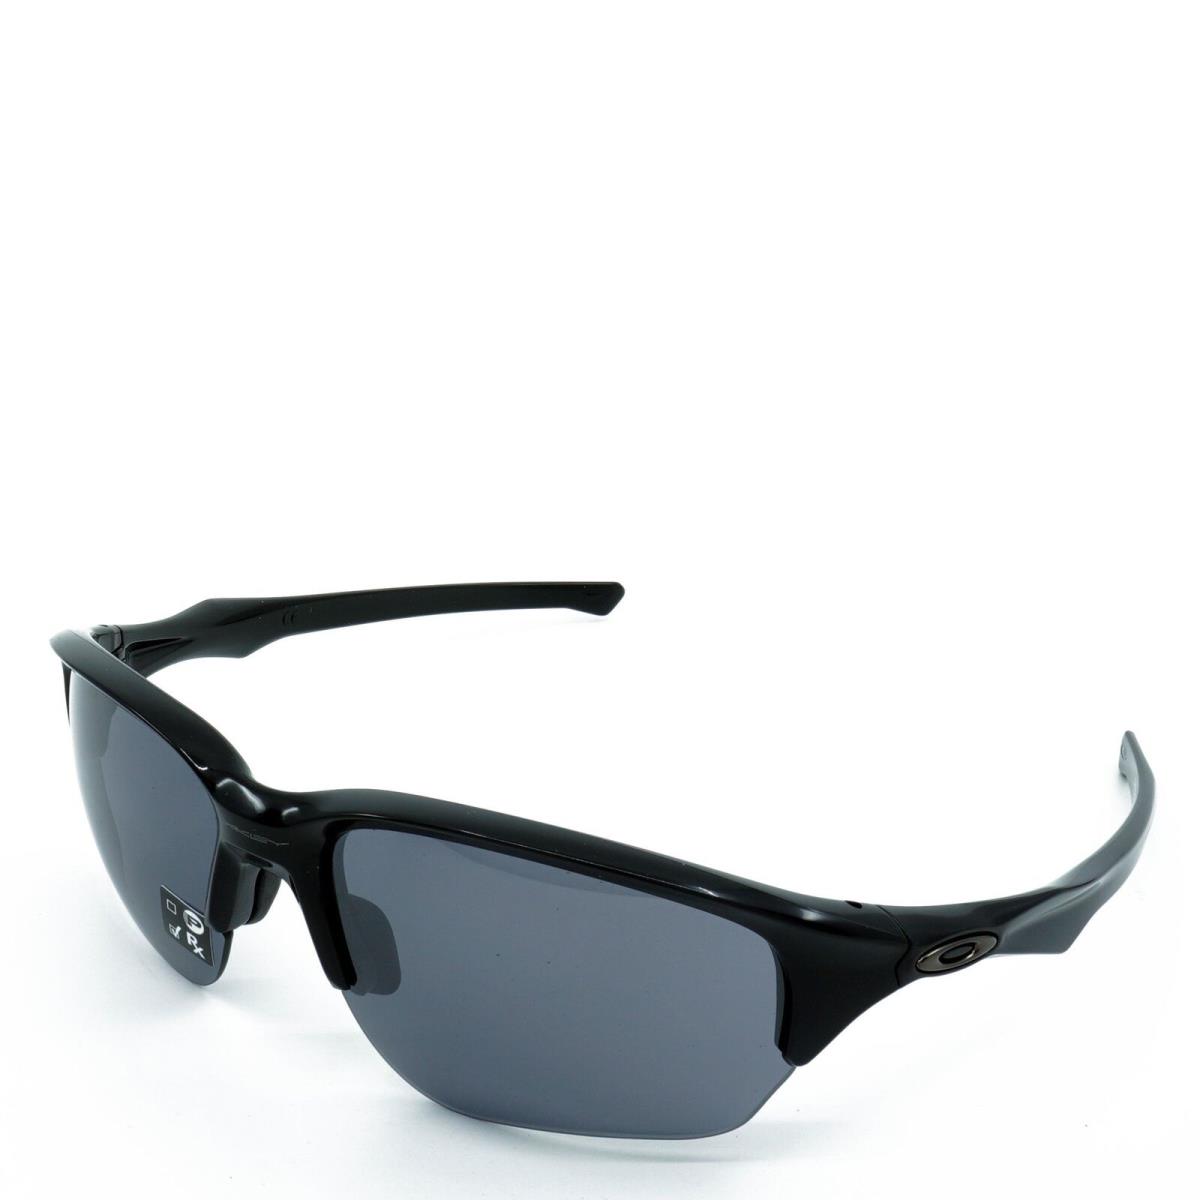 OO9363-02 Mens Oakley Flak Beta Sunglasses - Frame: Black, Lens: Black